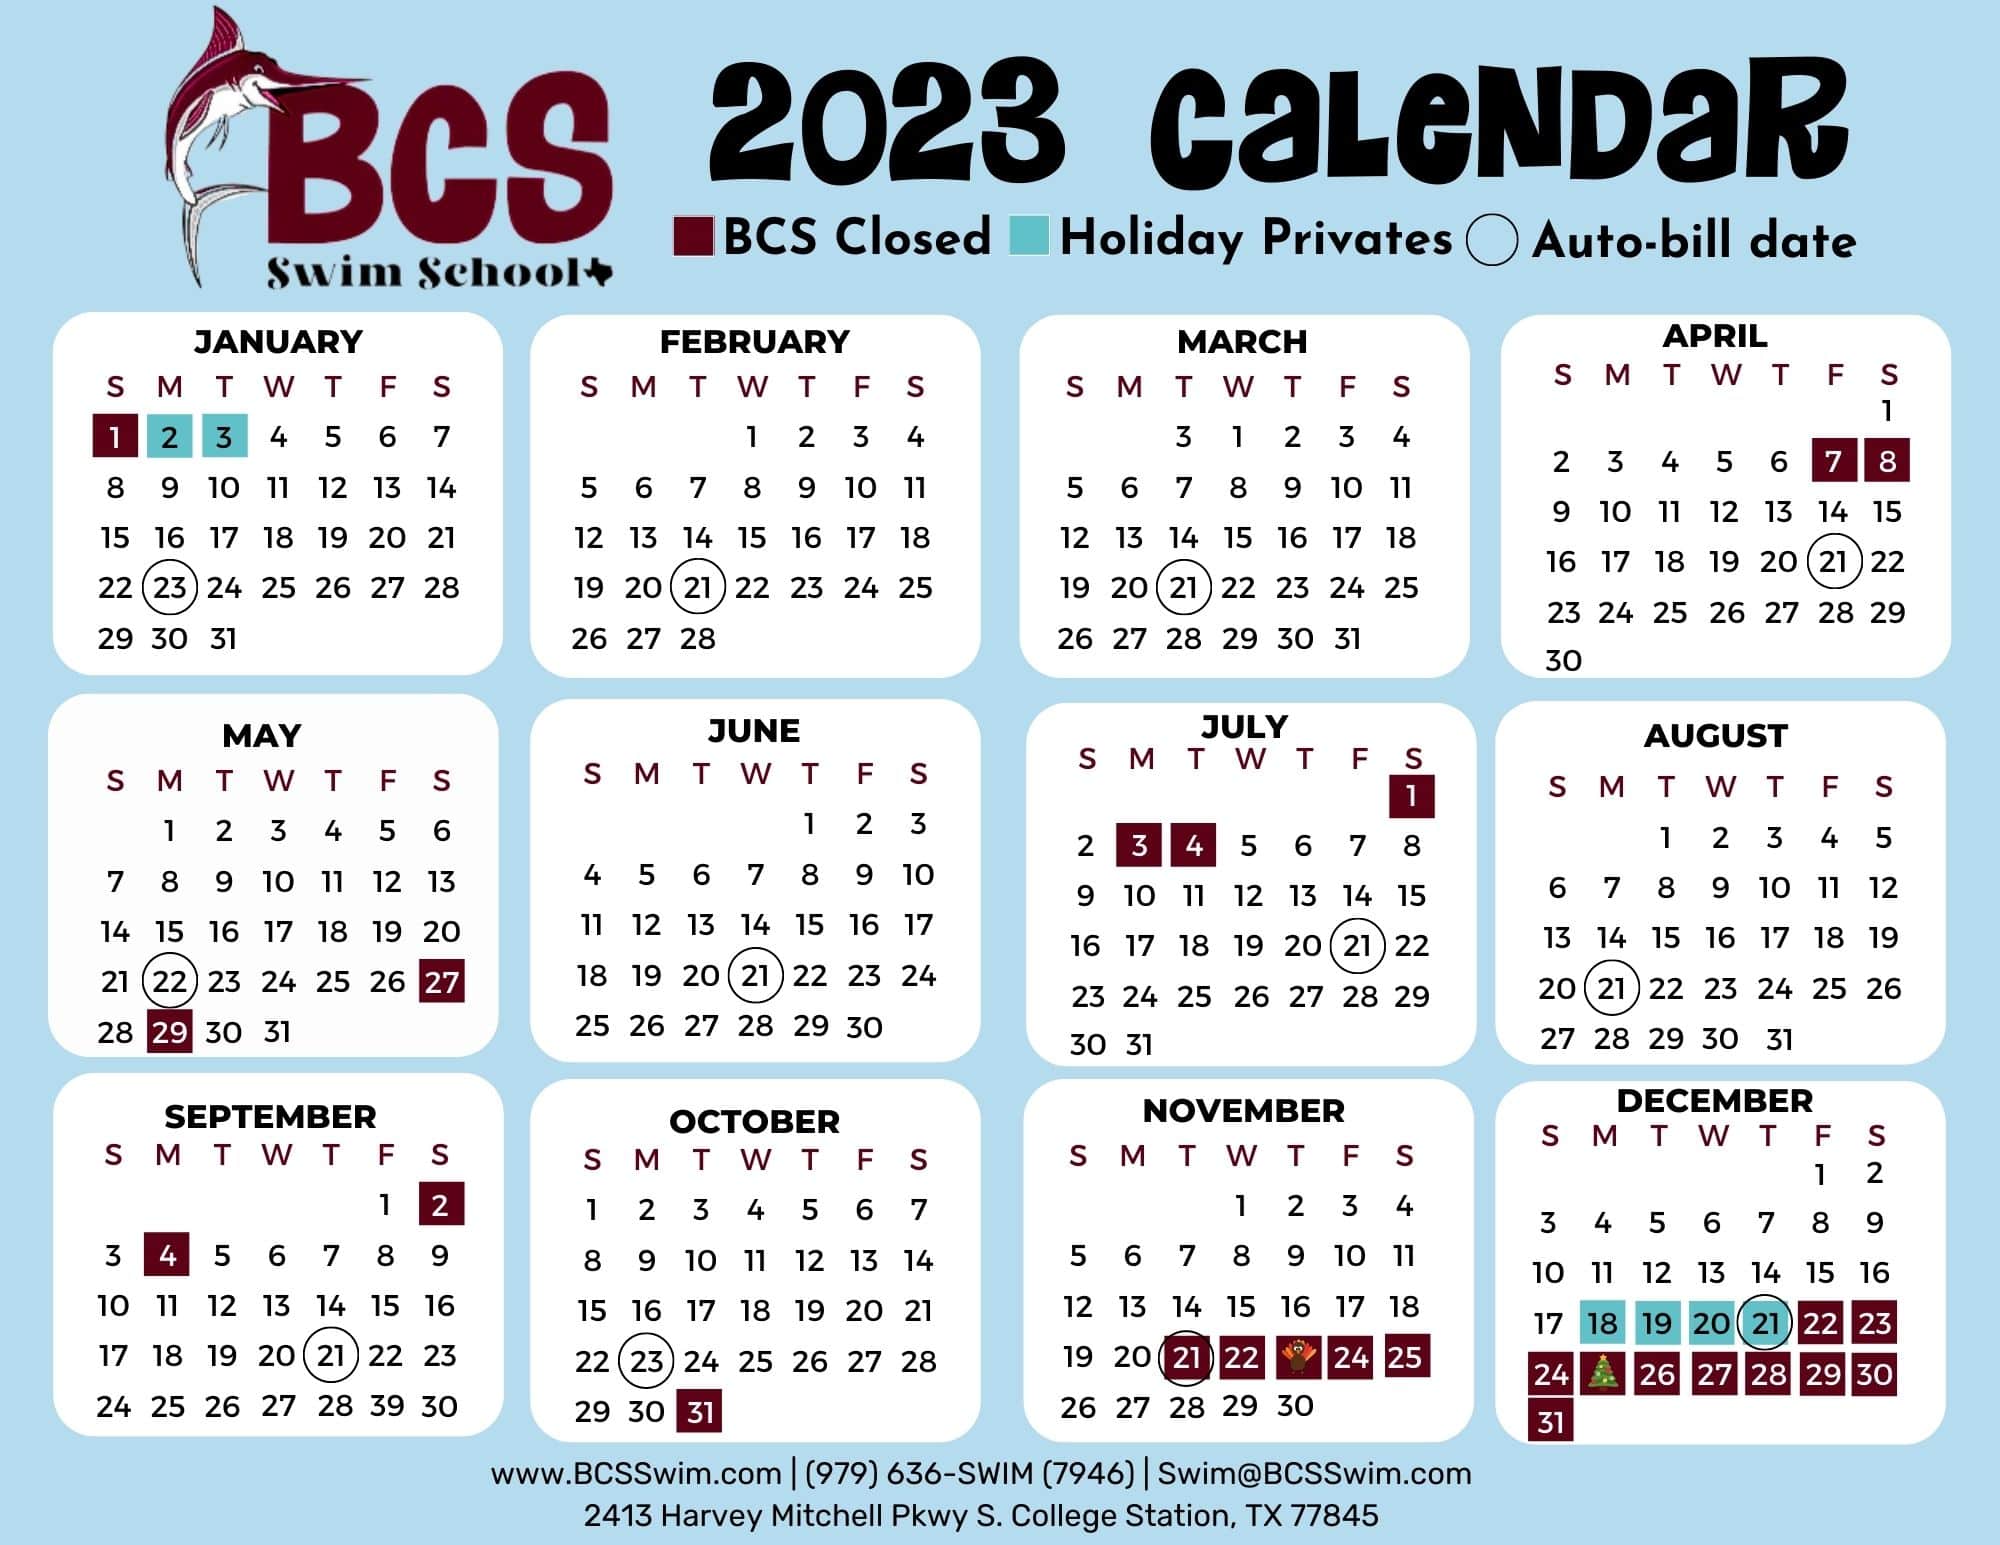 BCS Swim Calendar